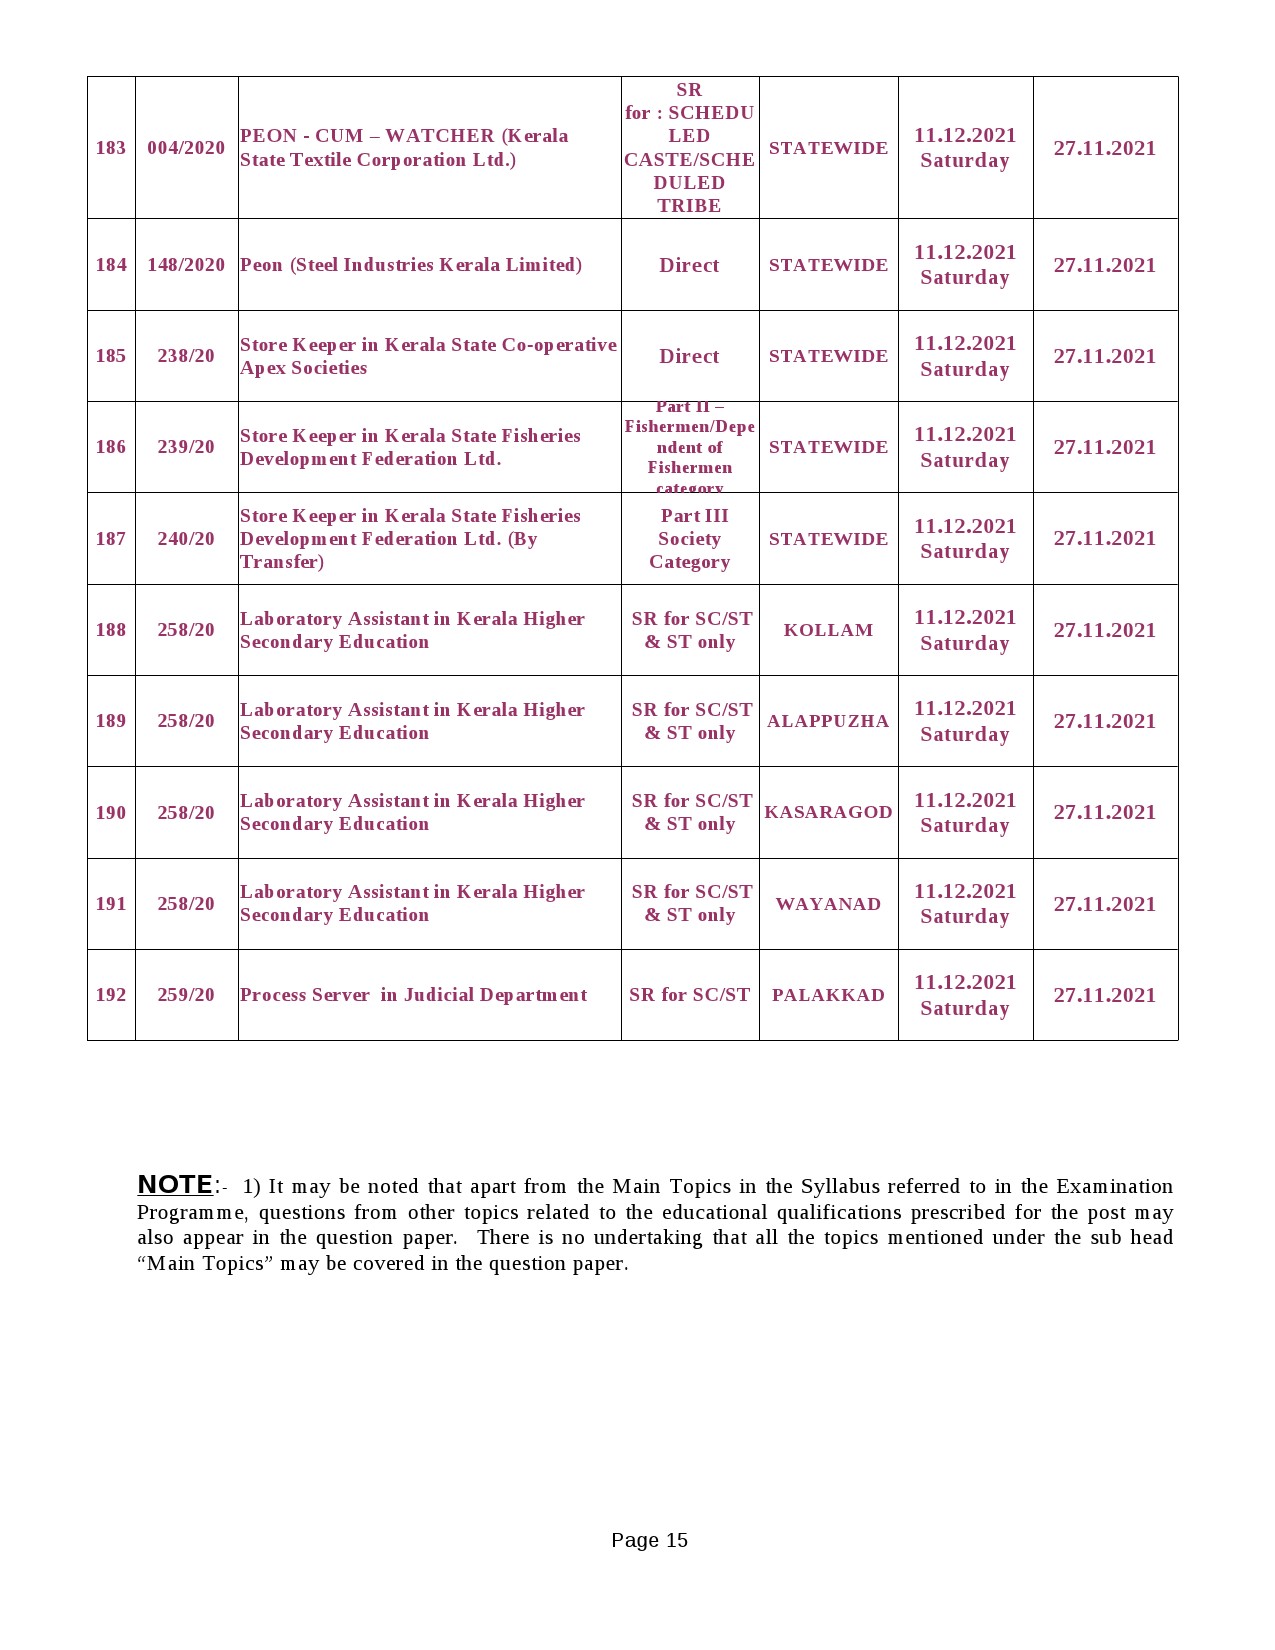 KPSC Programme For Main Examinations Of Upto SSLC Level Posts - Notification Image 15